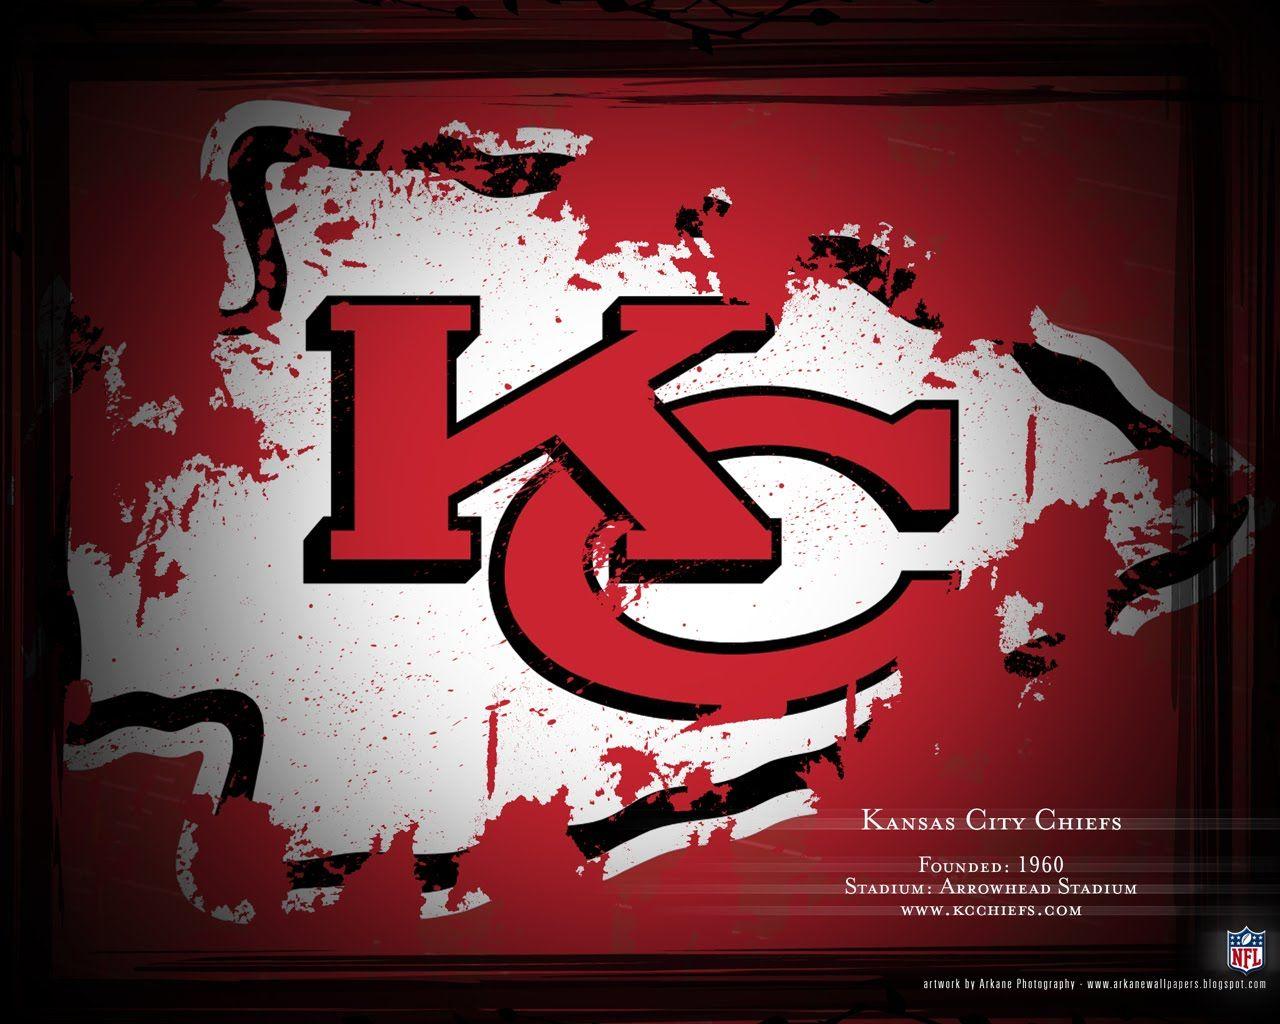 Arkane NFL Wallpaper: Profile City Chiefs. Chiefs wallpaper, Kansas city chiefs logo, Kansas city chiefs